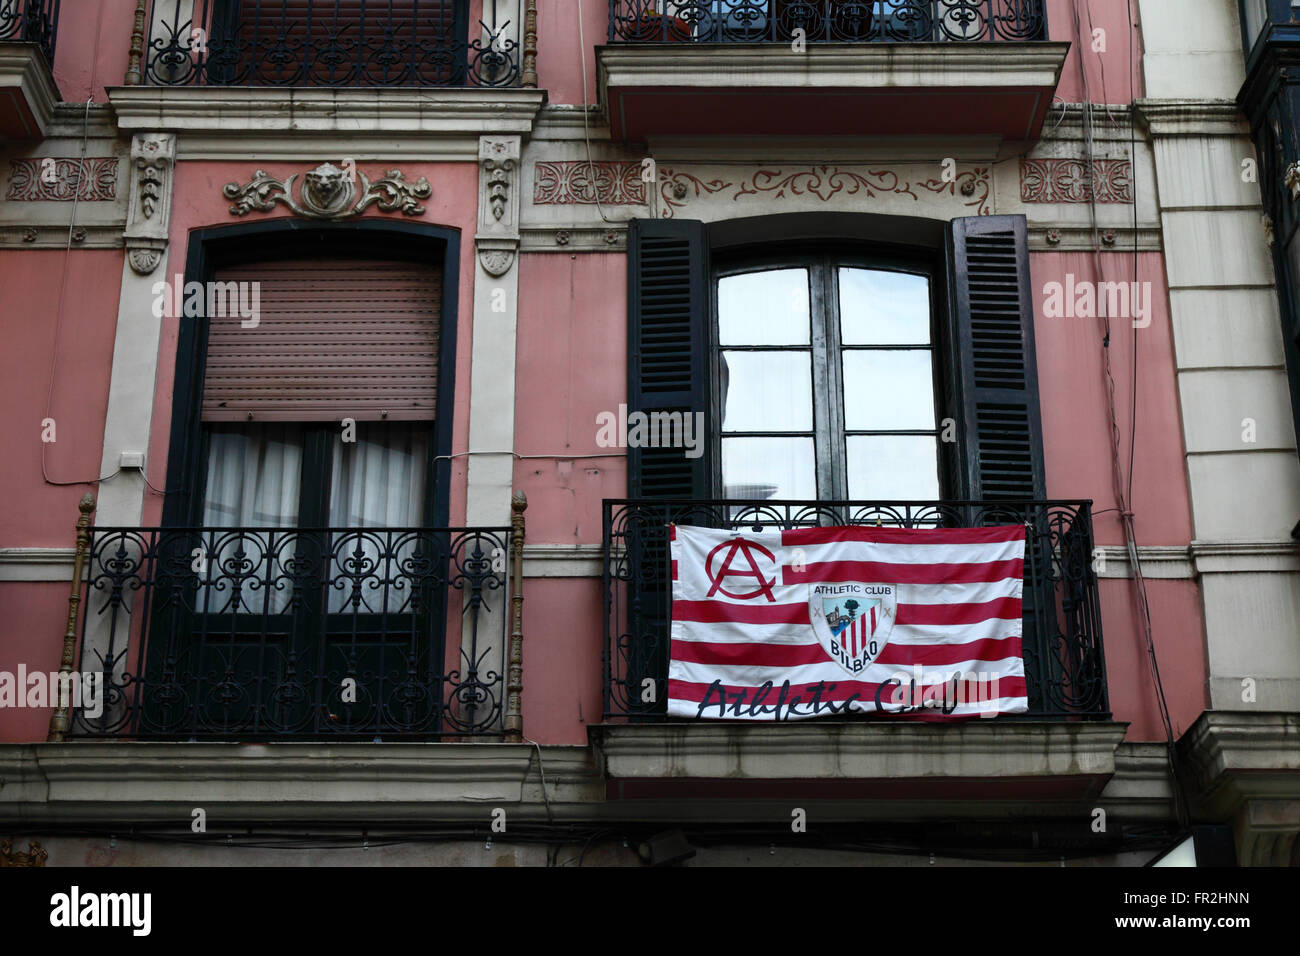 El Athletic Club de Bilbao, equipo de fútbol de banner en balcón, Bilbao, País Vasco, España Foto de stock